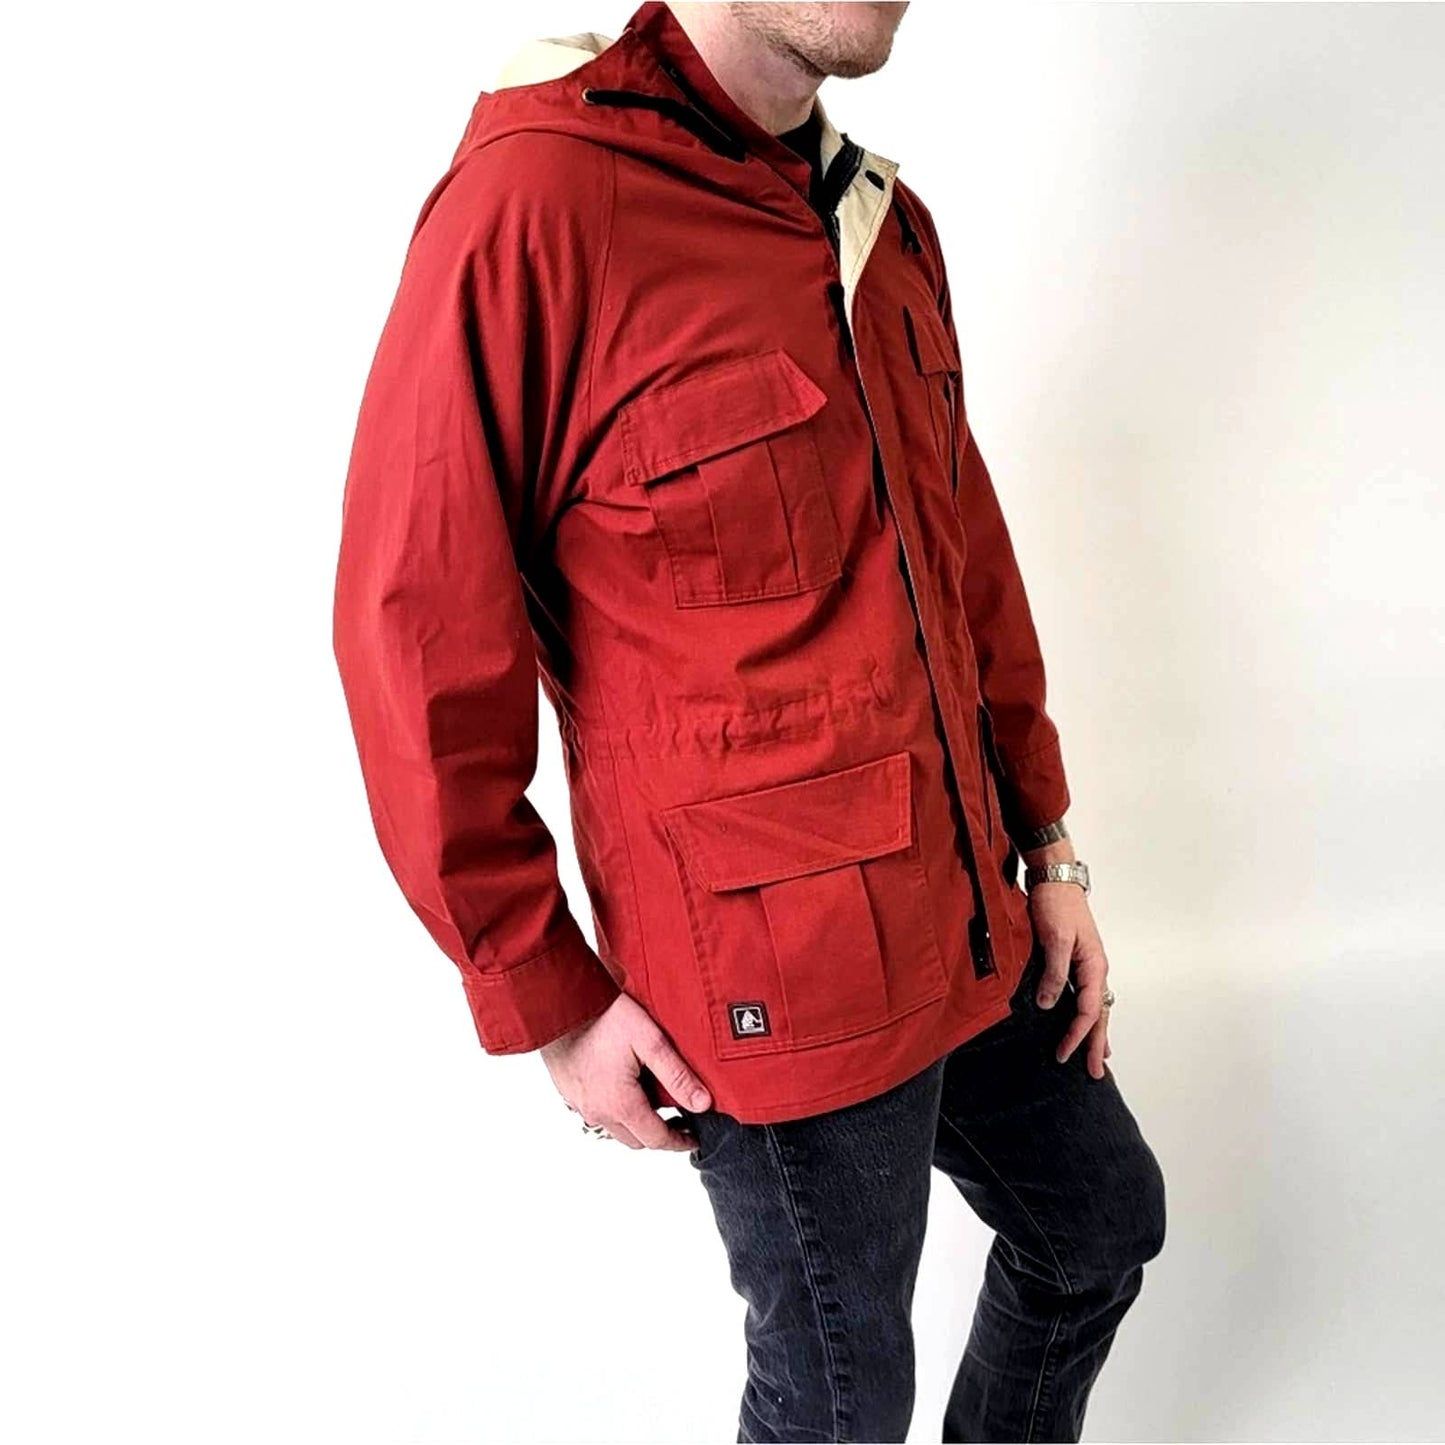 Vintage Altra Red Lightweight Jacket - S